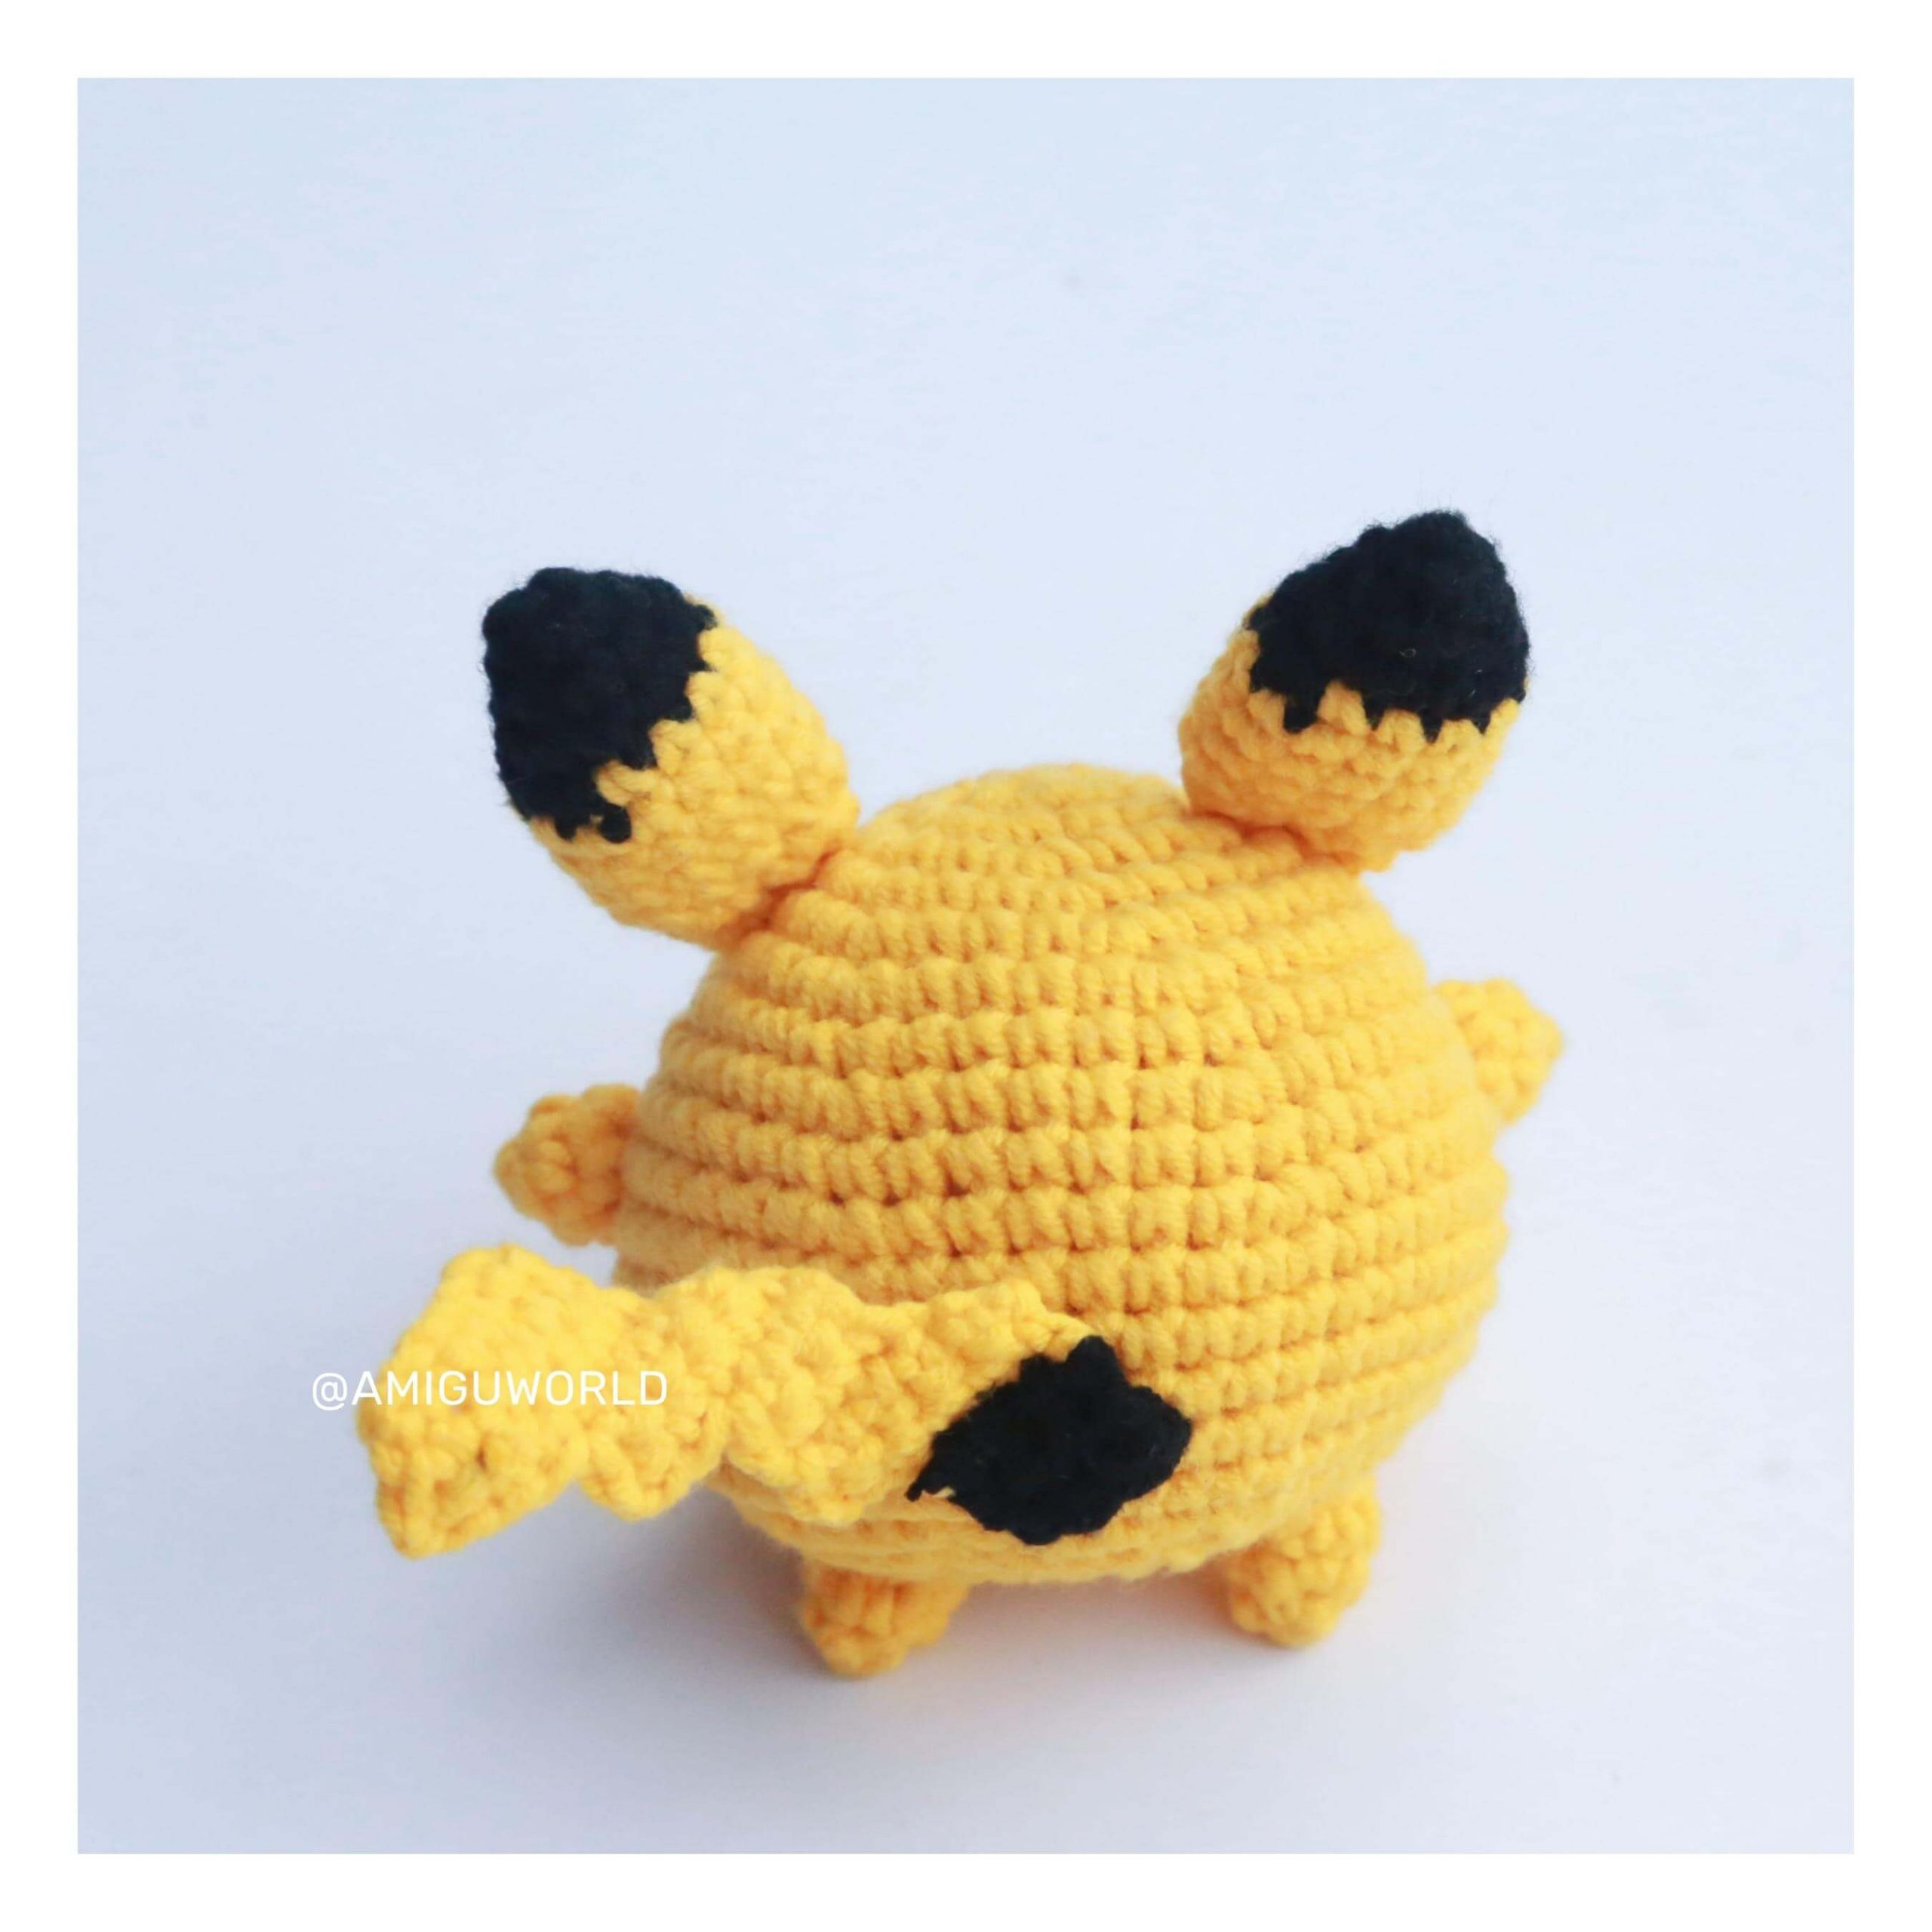 pikachu-amigurumi-crochet-pattern-by-amiguworld (6)